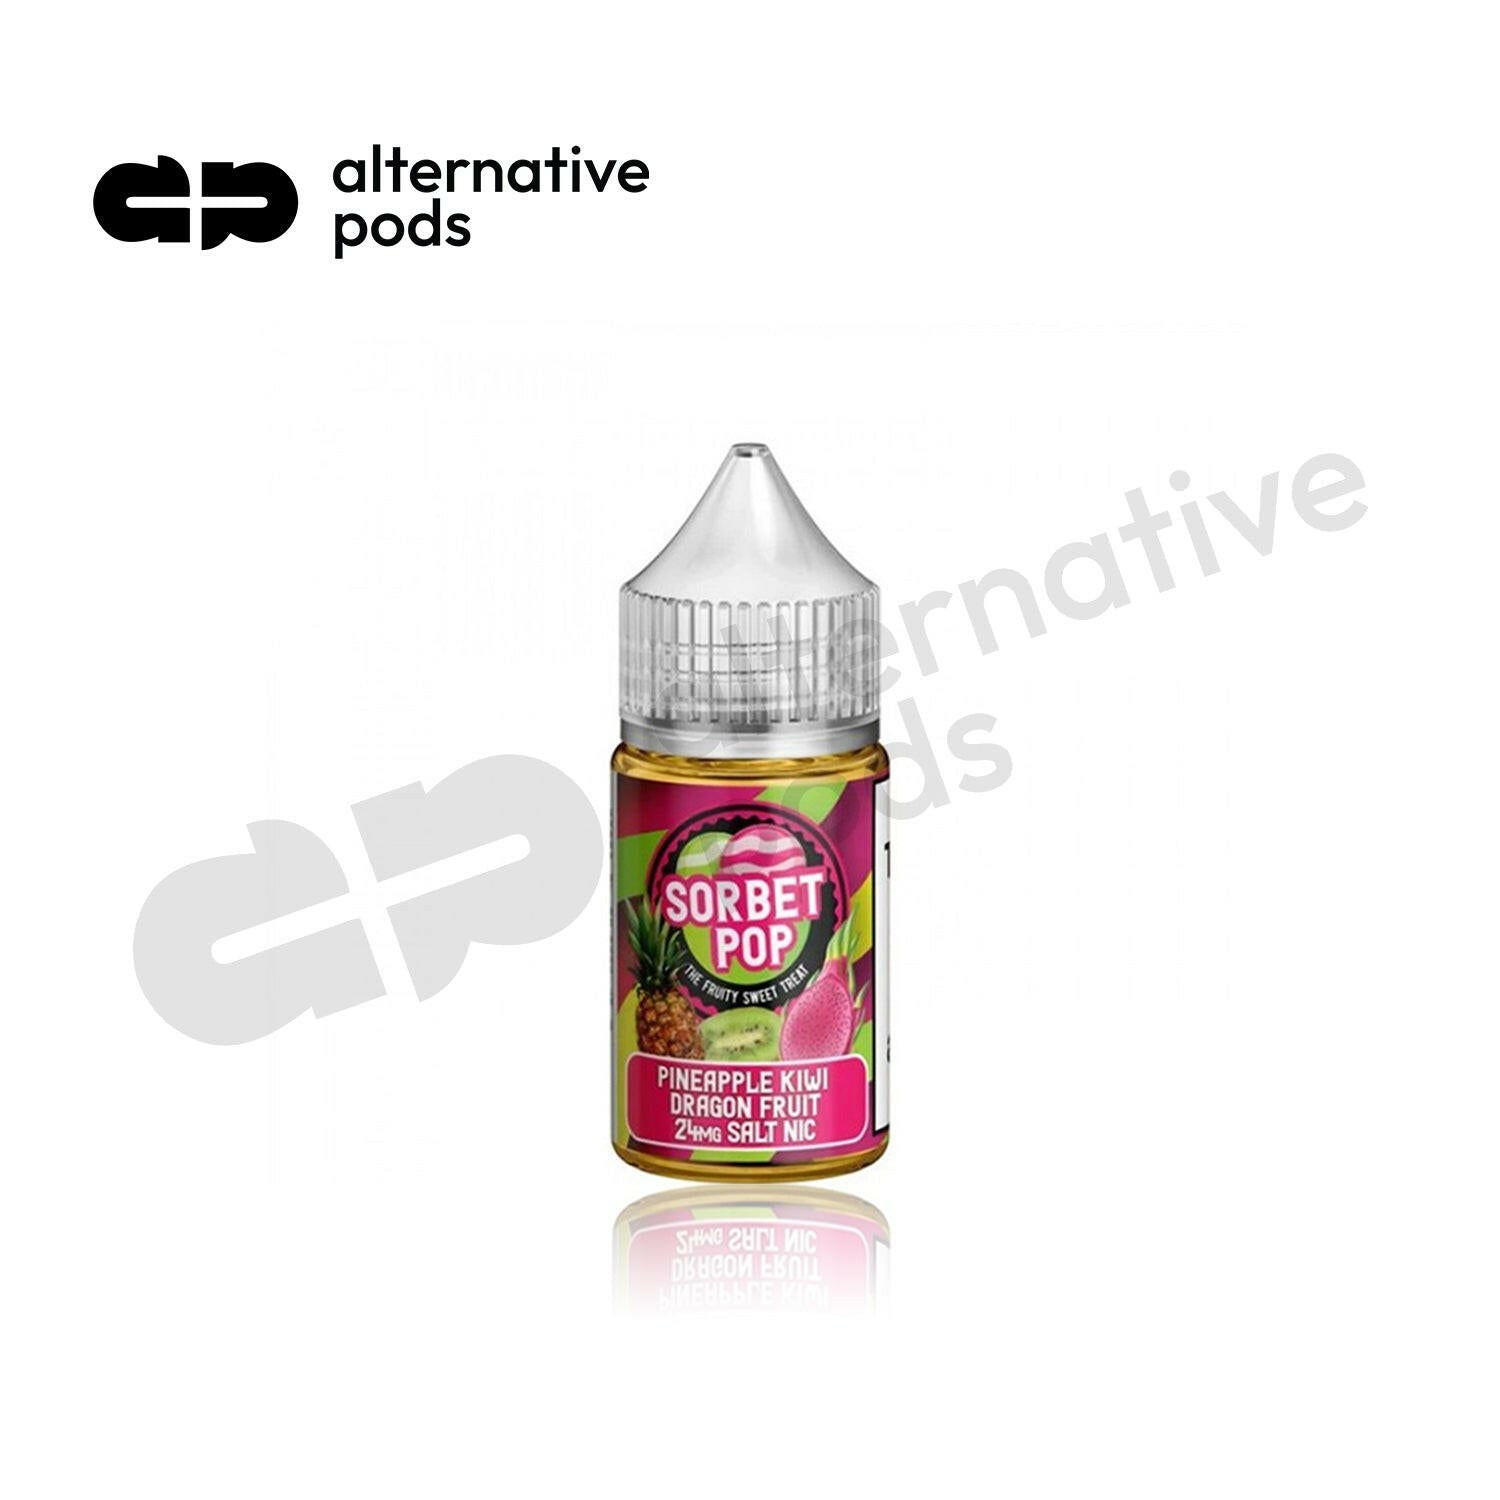 Sorbet Pop Salt Nicotine E-Liquid 30ML - Online Vape Shop | Alternative pods | Affordable Vapor Store | Vape Disposables